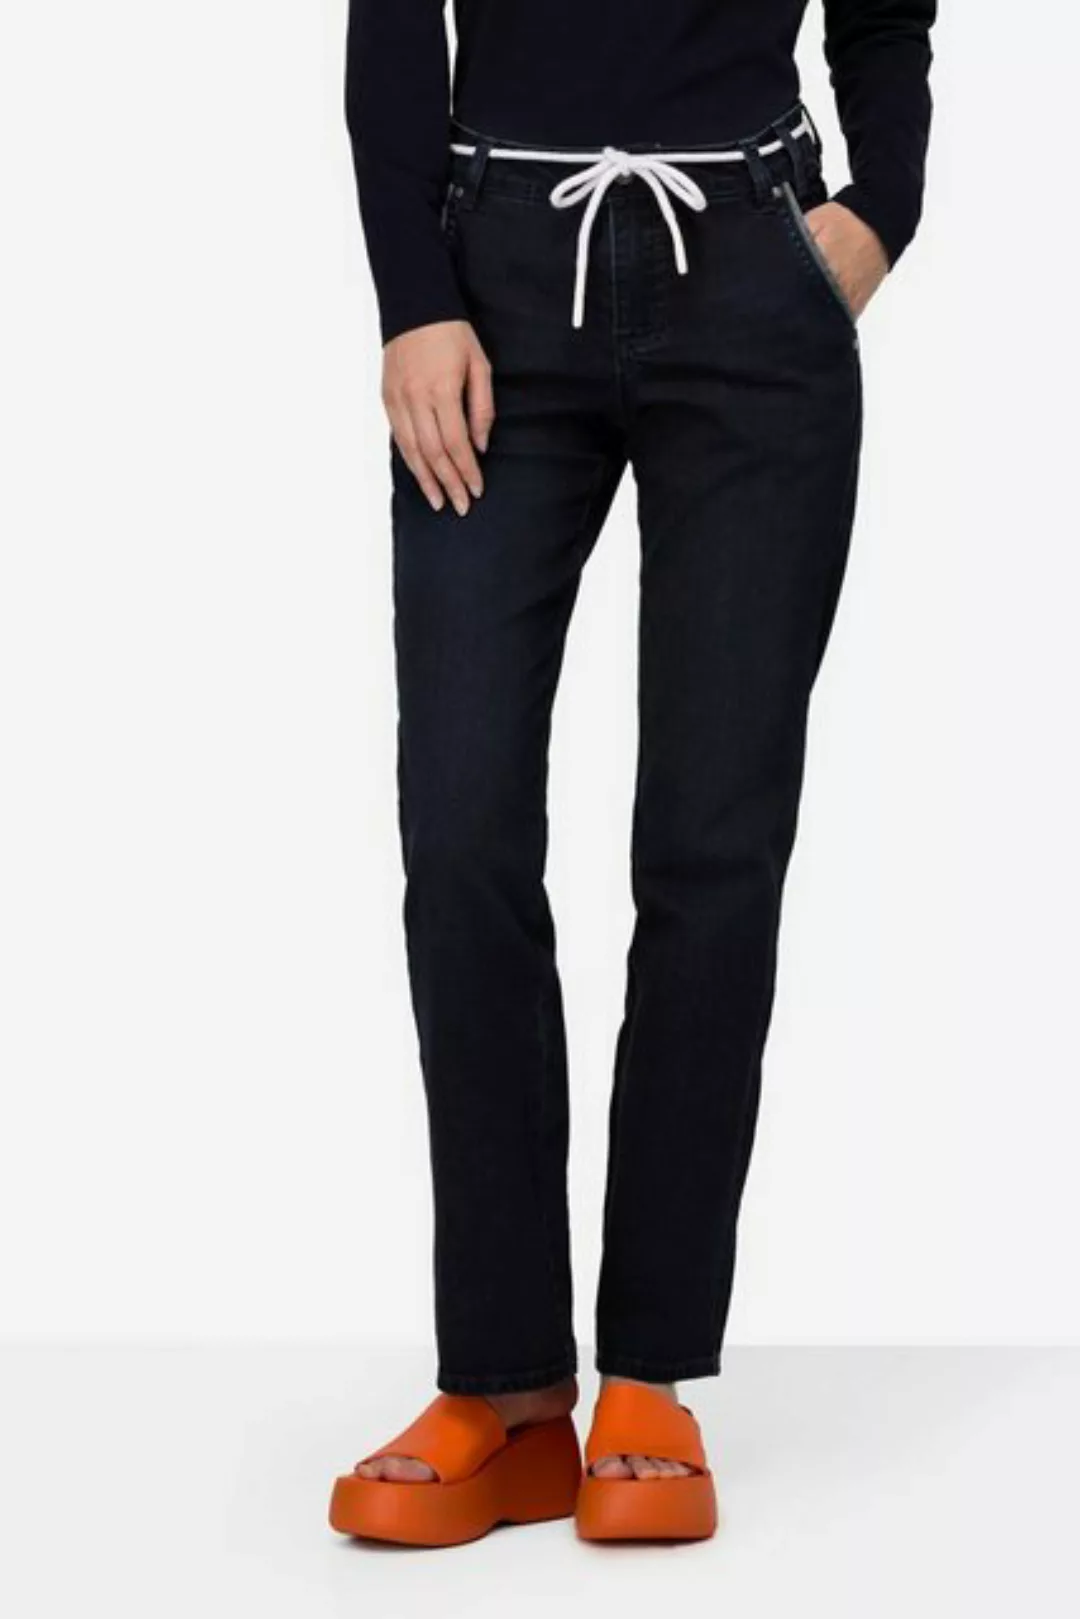 Laurasøn 5-Pocket-Jeans Bootcut-Jeans Tina gerade Passform 5-Pocket günstig online kaufen